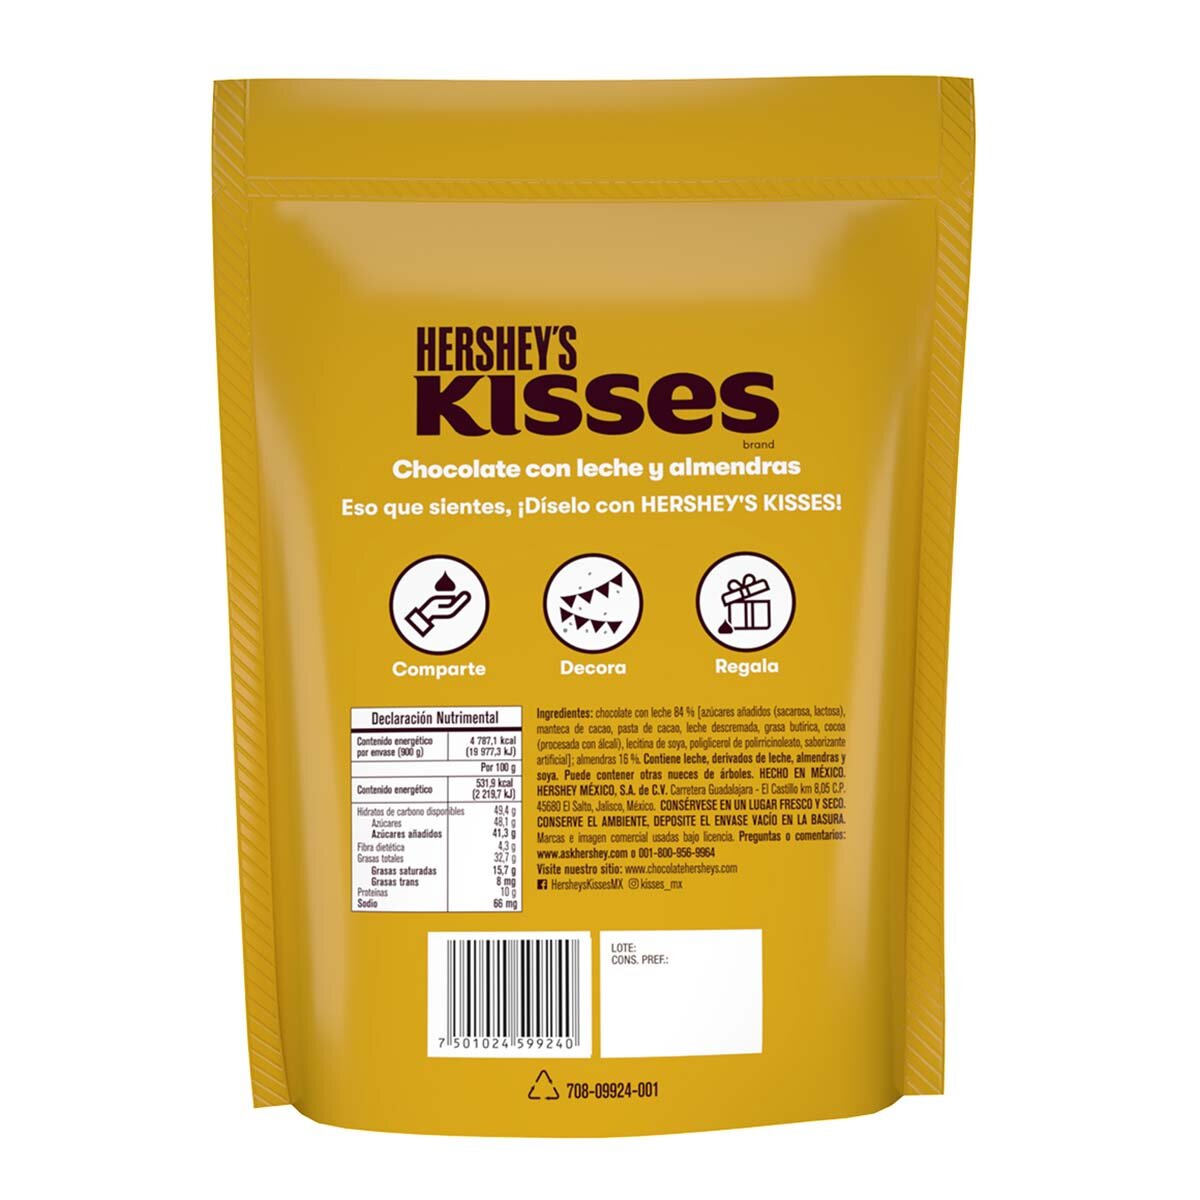 Hershey's Kisses Chocolates con Leche y Almendras 900 g